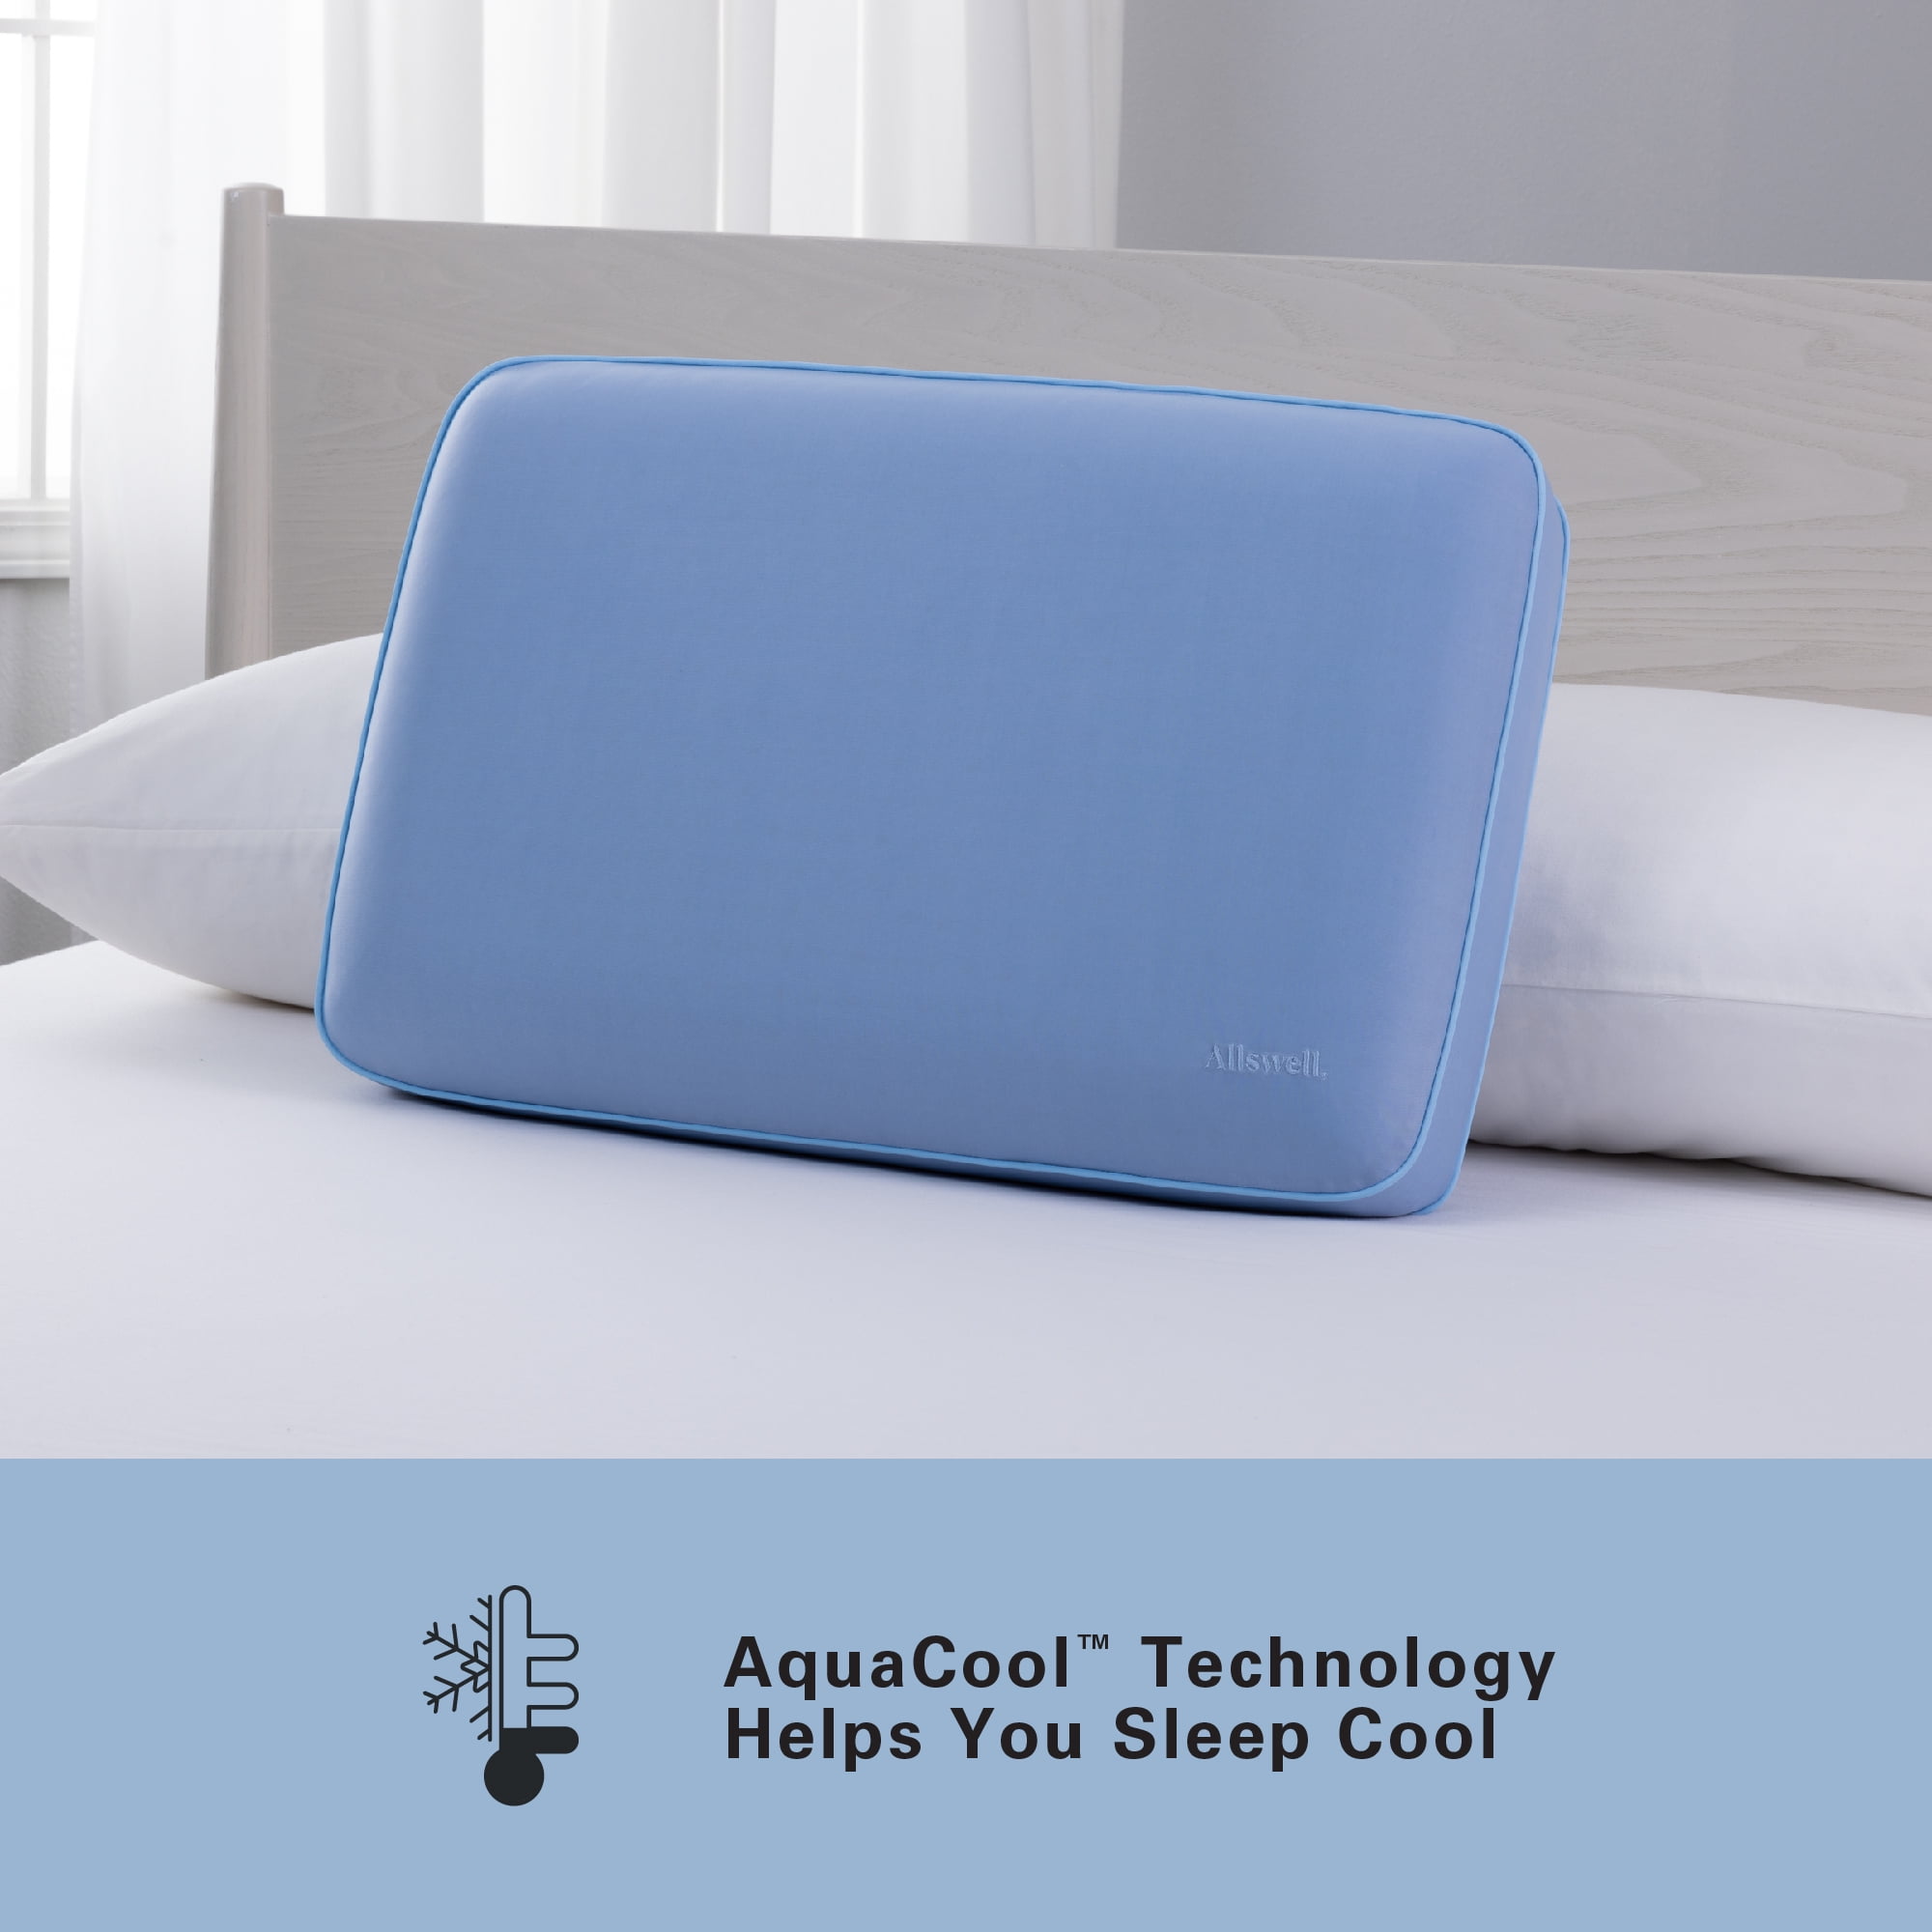 Allswell AquaCool Memory Foam Pillow, Standard Queen (16” x 25” x 5.5”) 